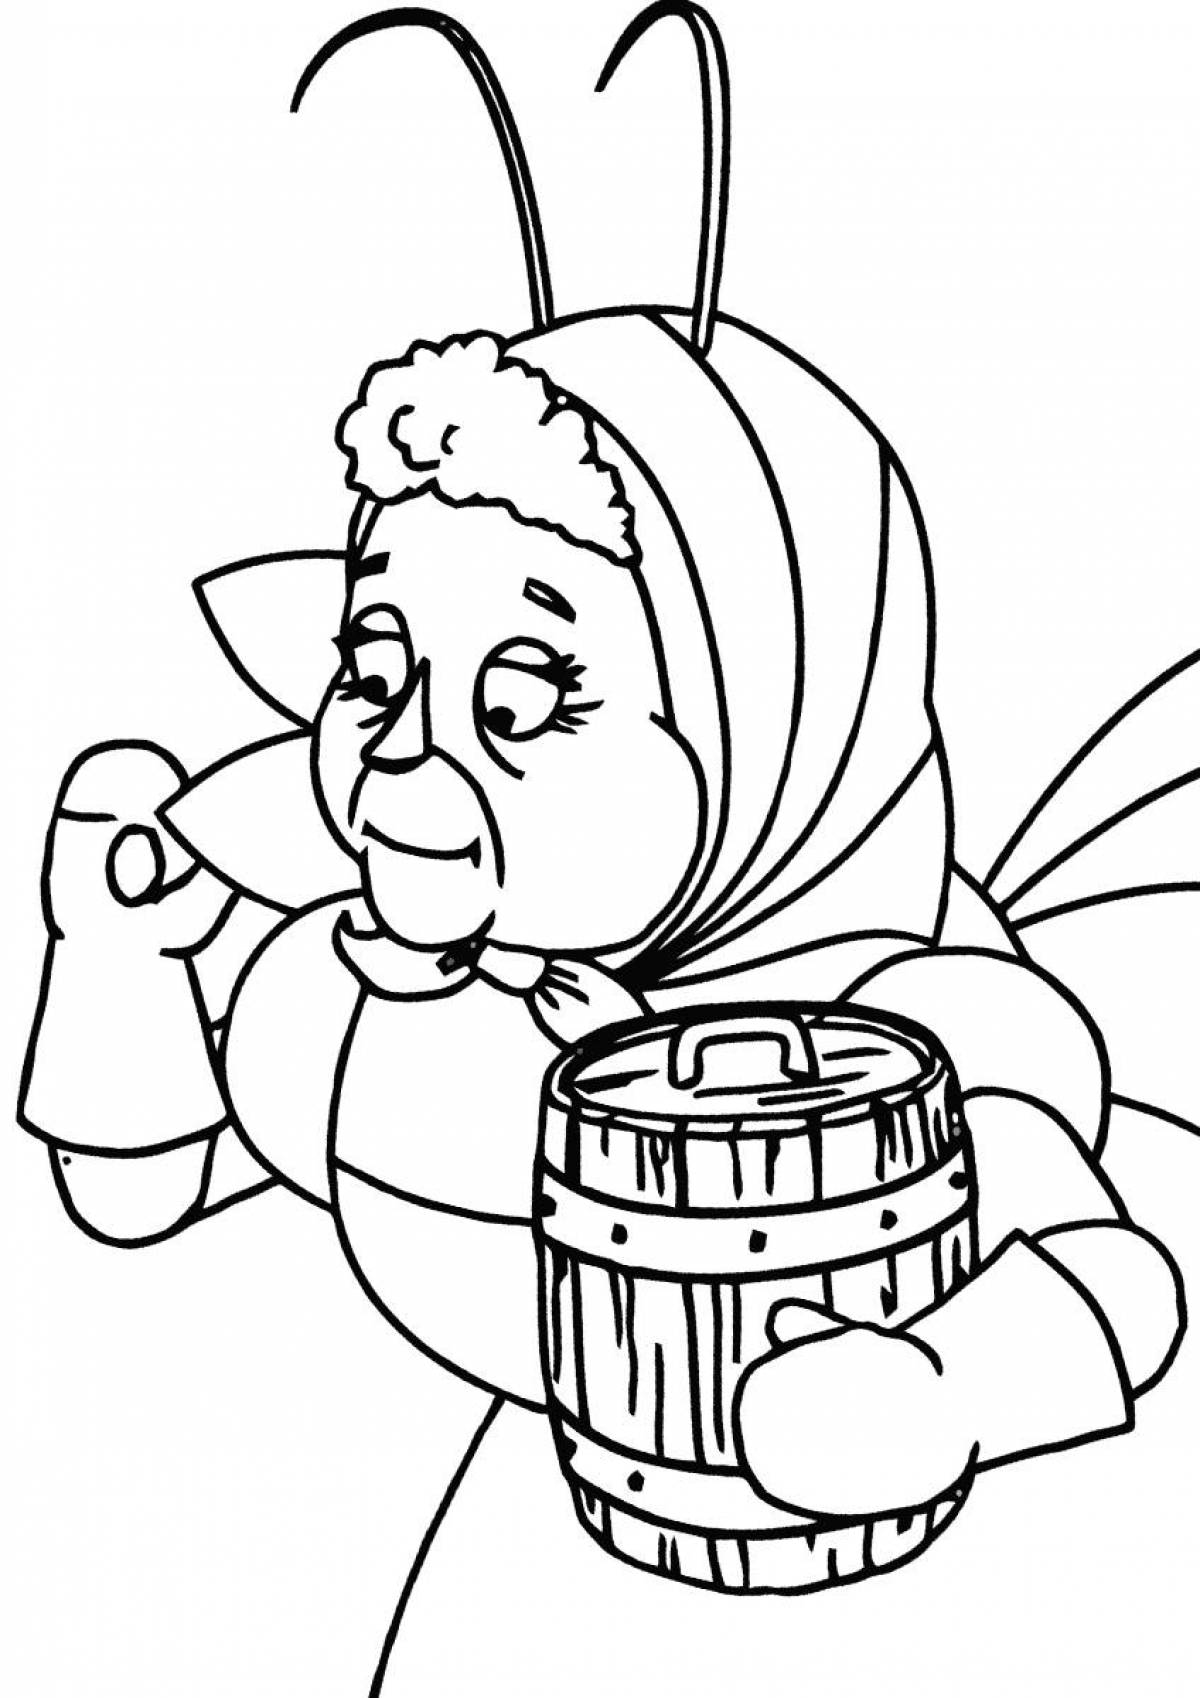 Baba capa with a barrel of honey